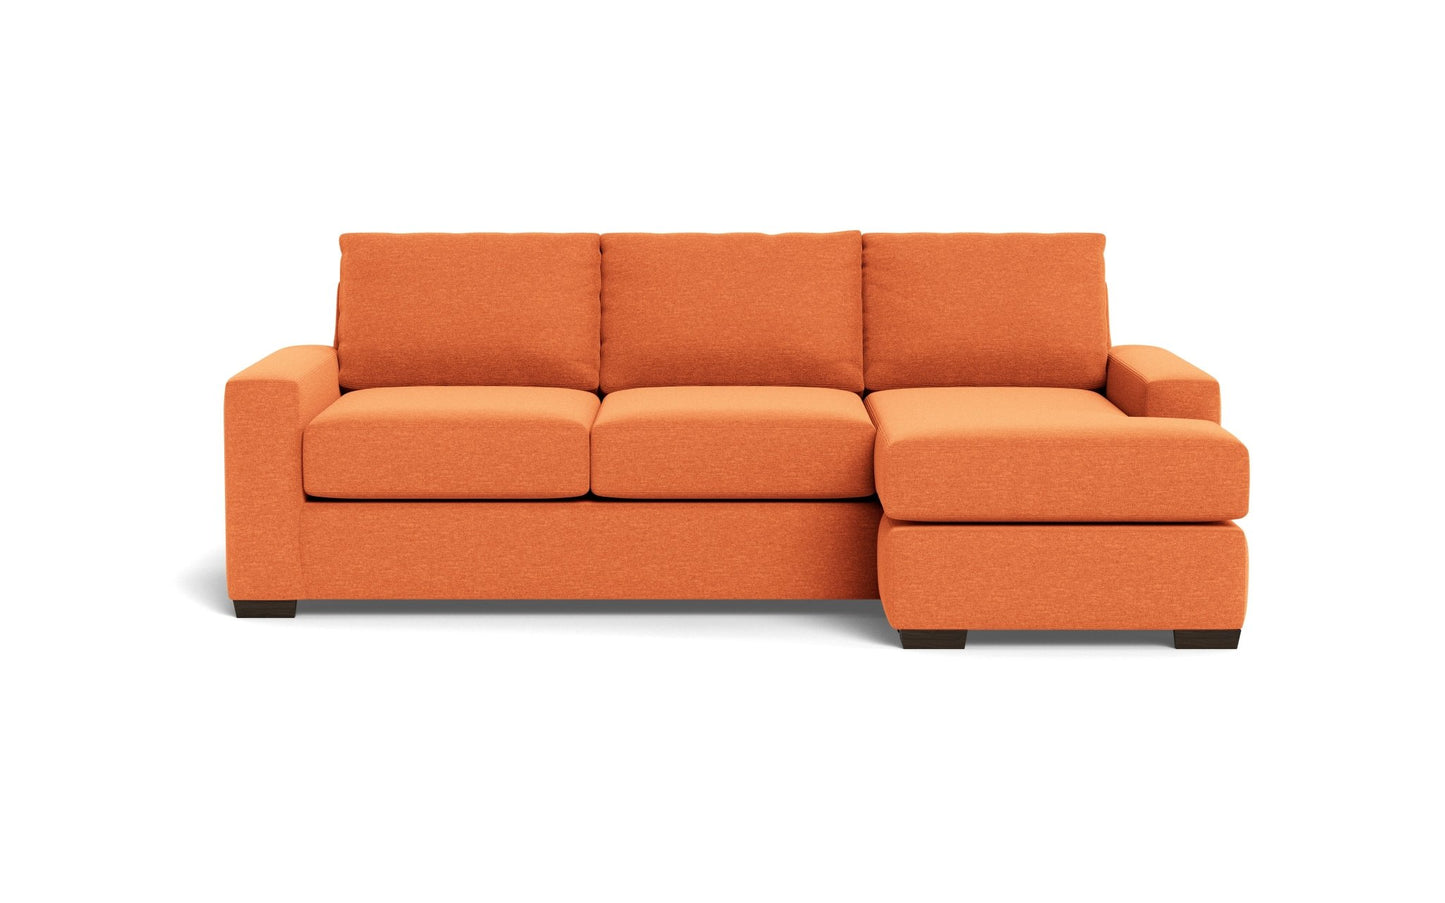 Mas Mesa Reversible Chaise Sofa - Bennett Orangeade